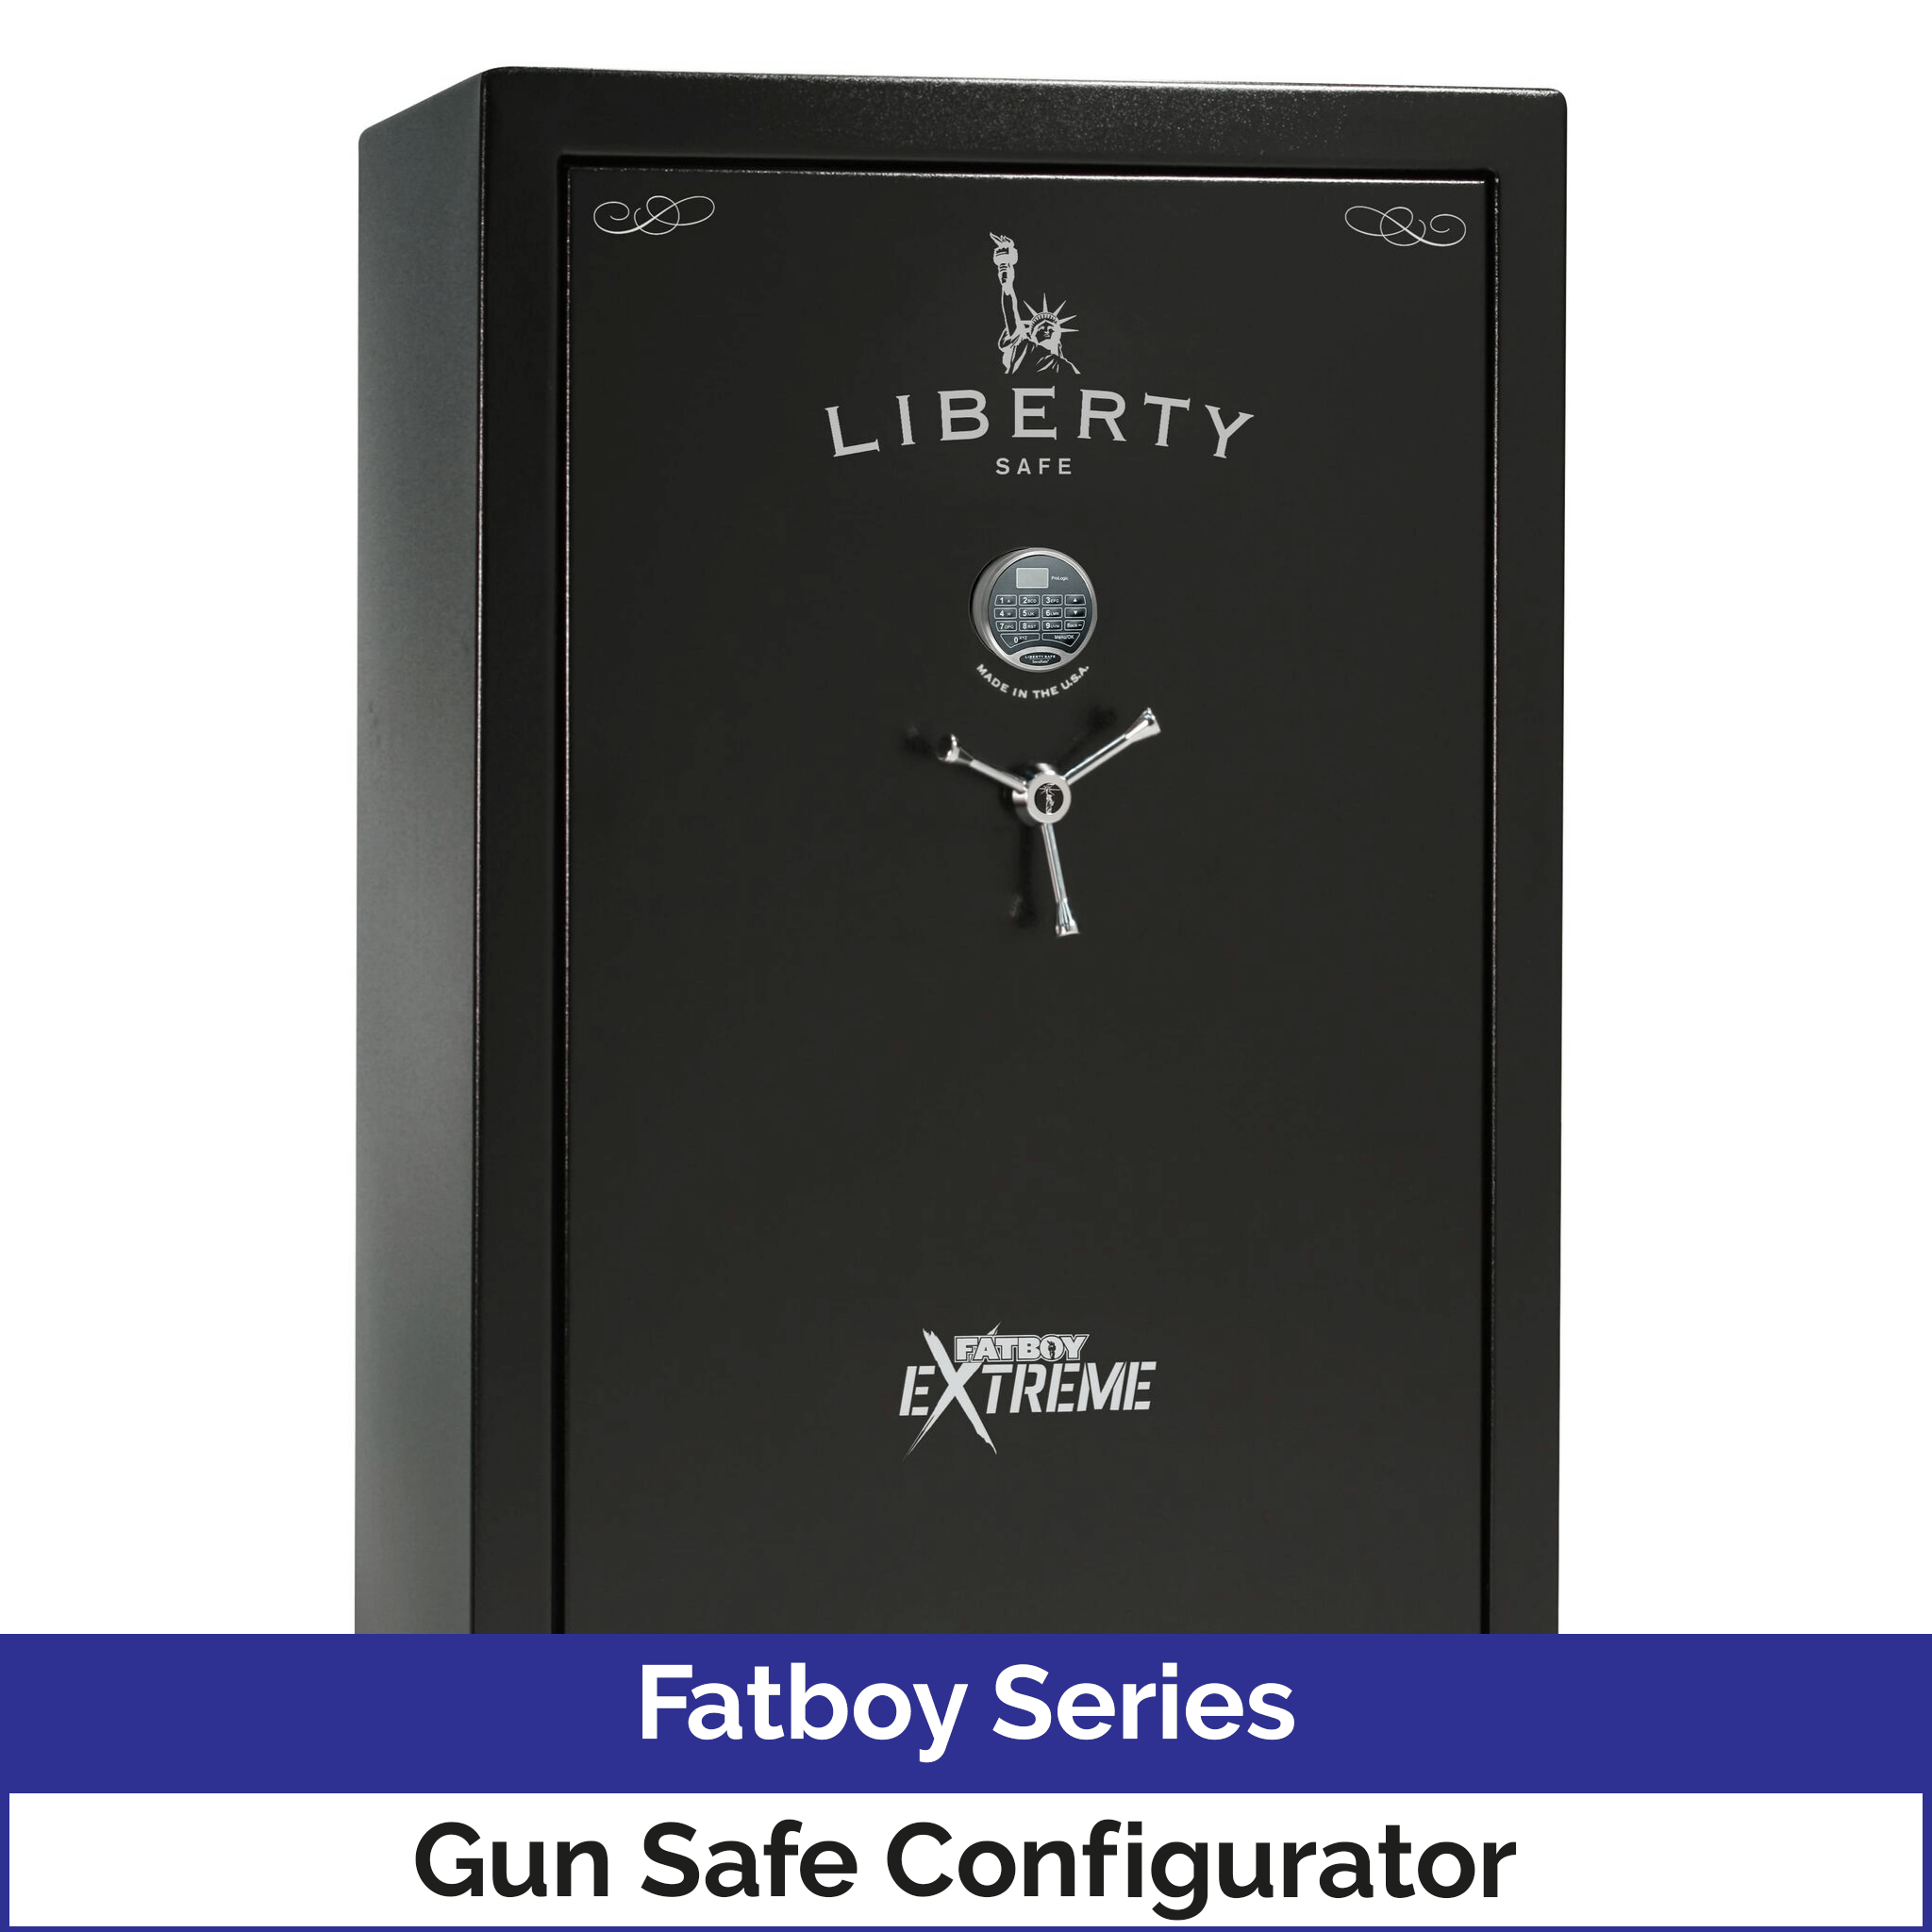 Liberty Fatboy Series Gun Safe Configurator, image 1 